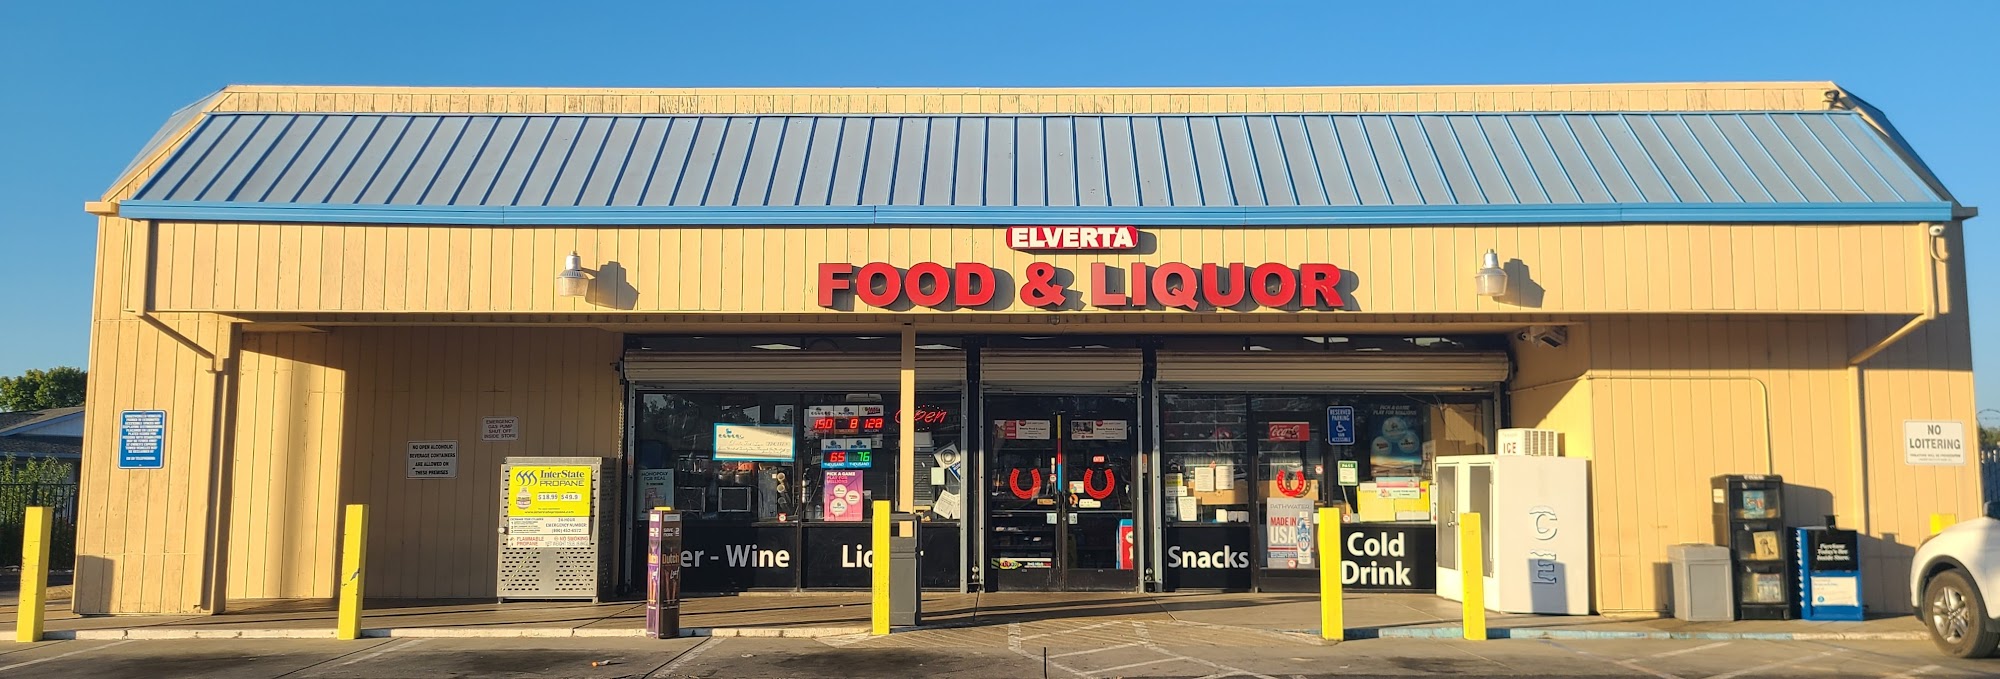 Elverta Food & Liquor